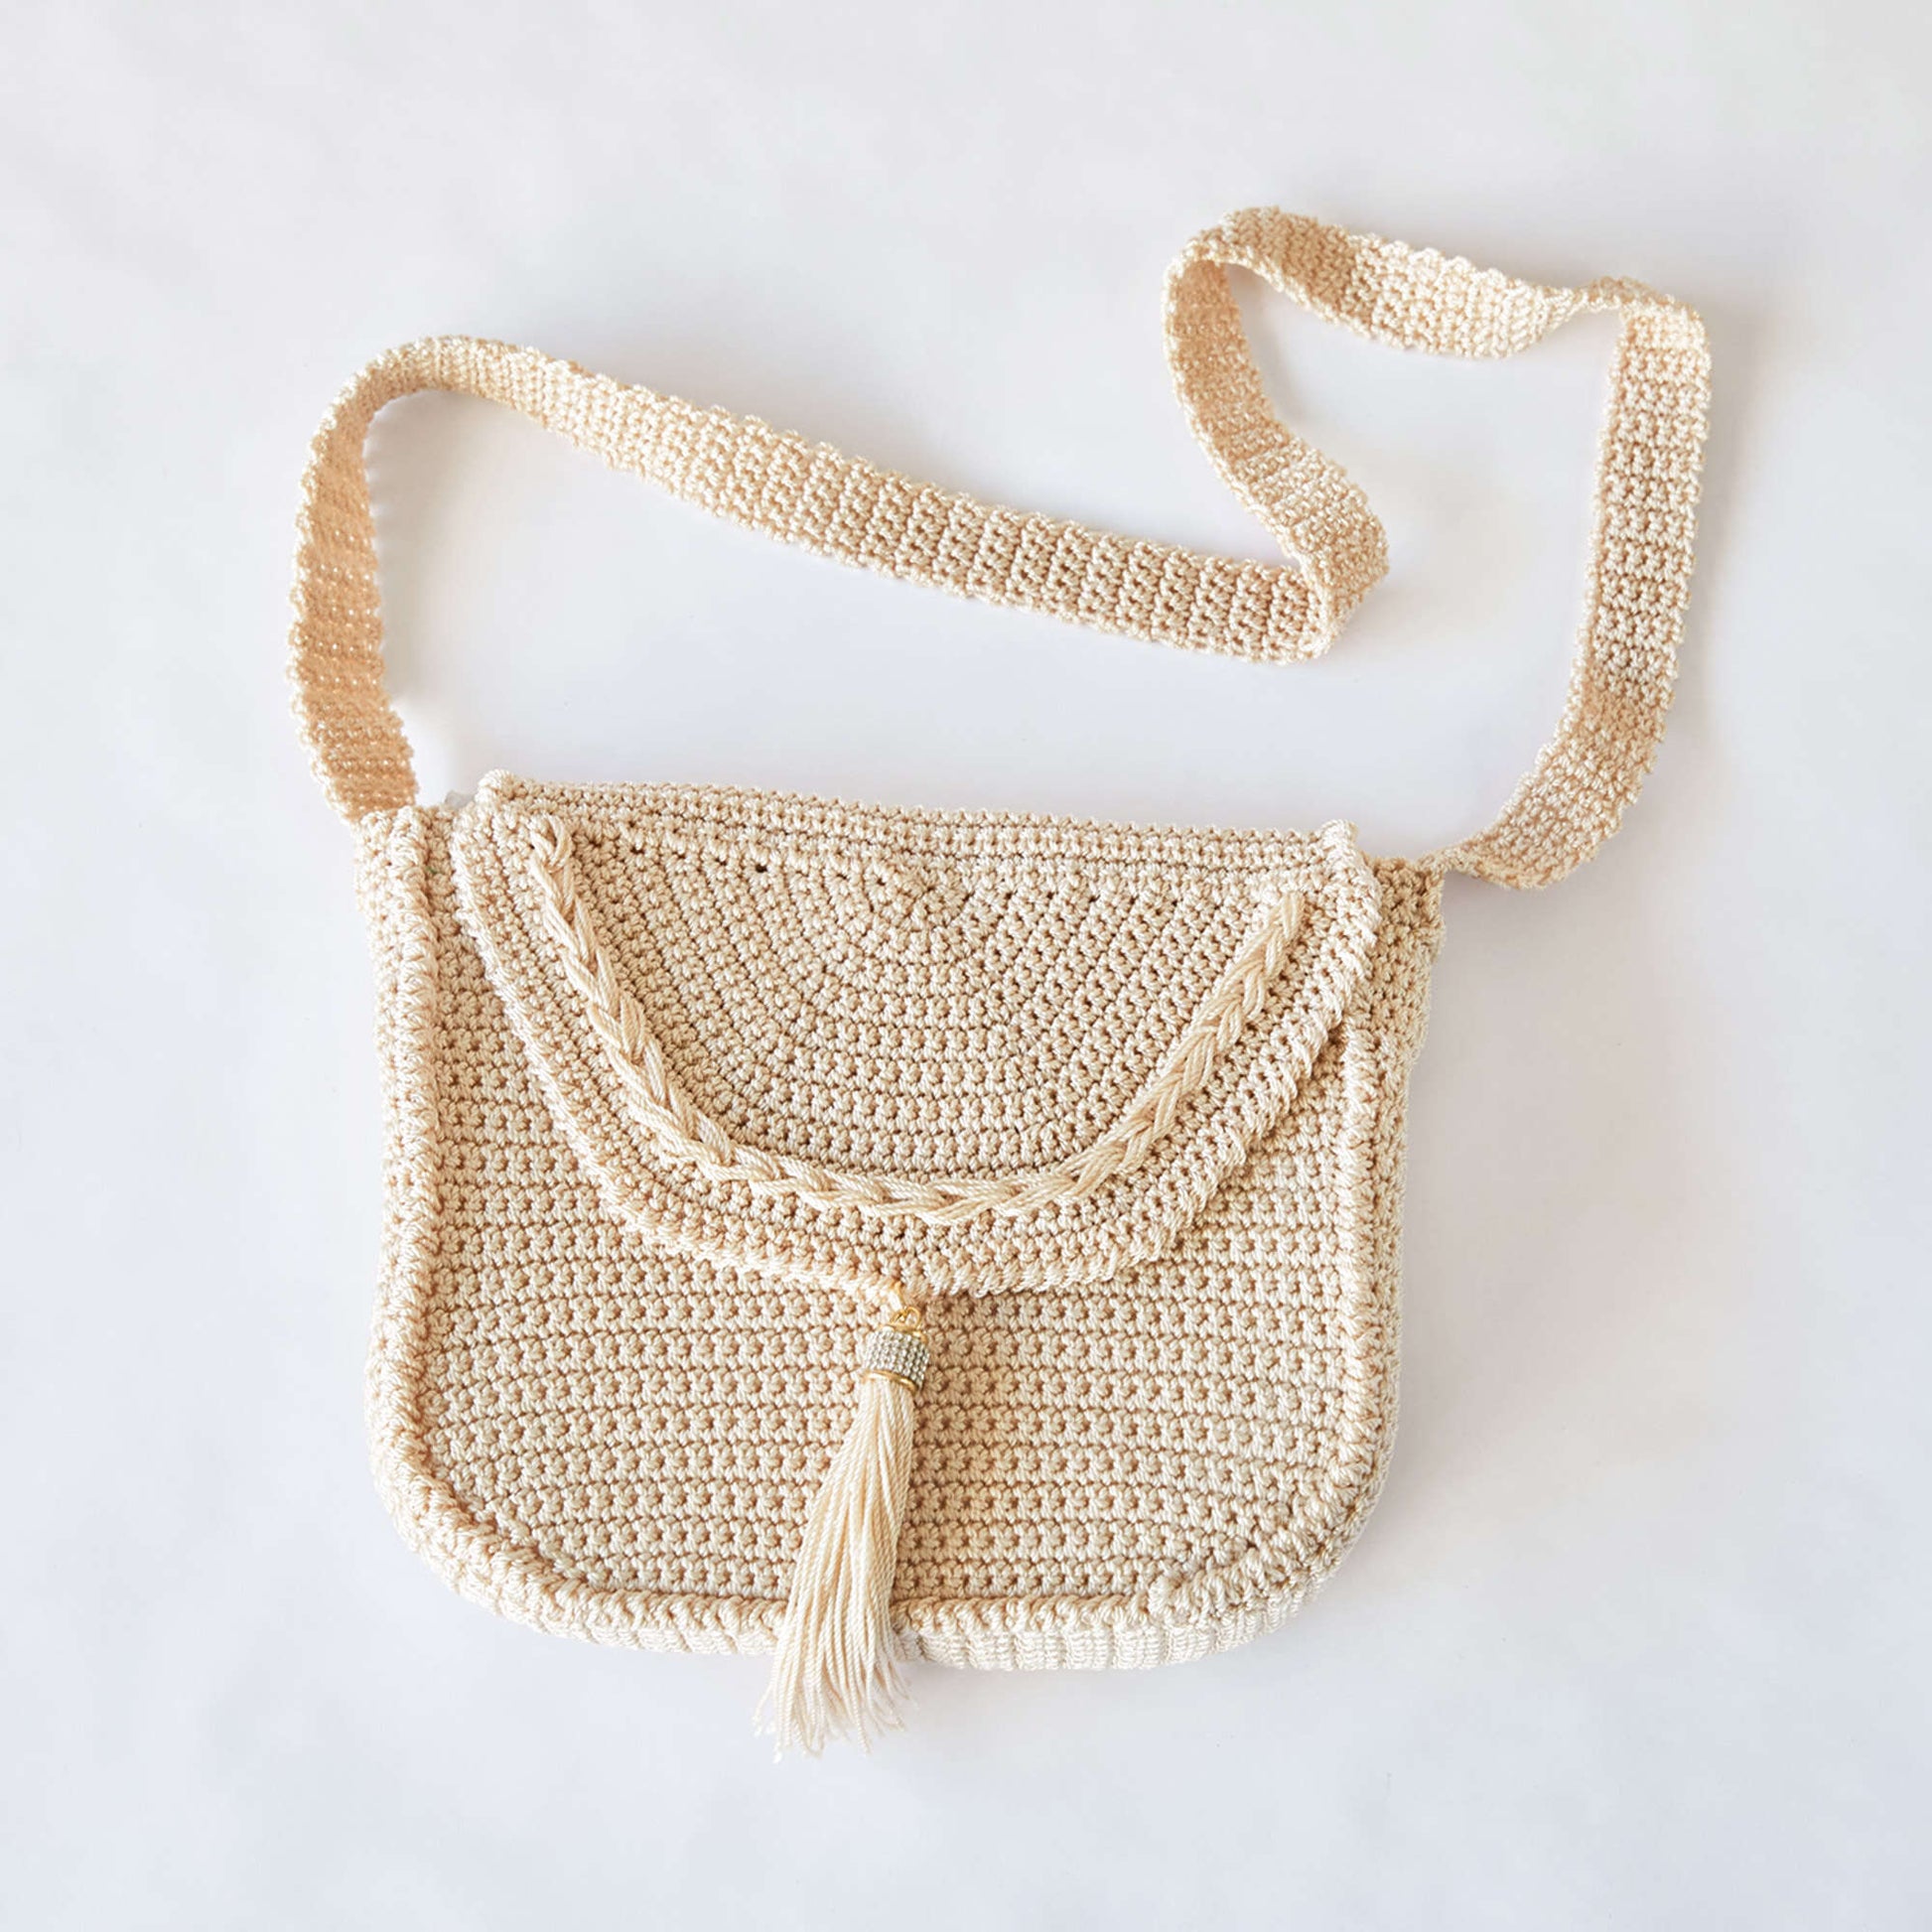 Clark's Bag Book: Crochet Patterns to Make 100 Bags [Book]